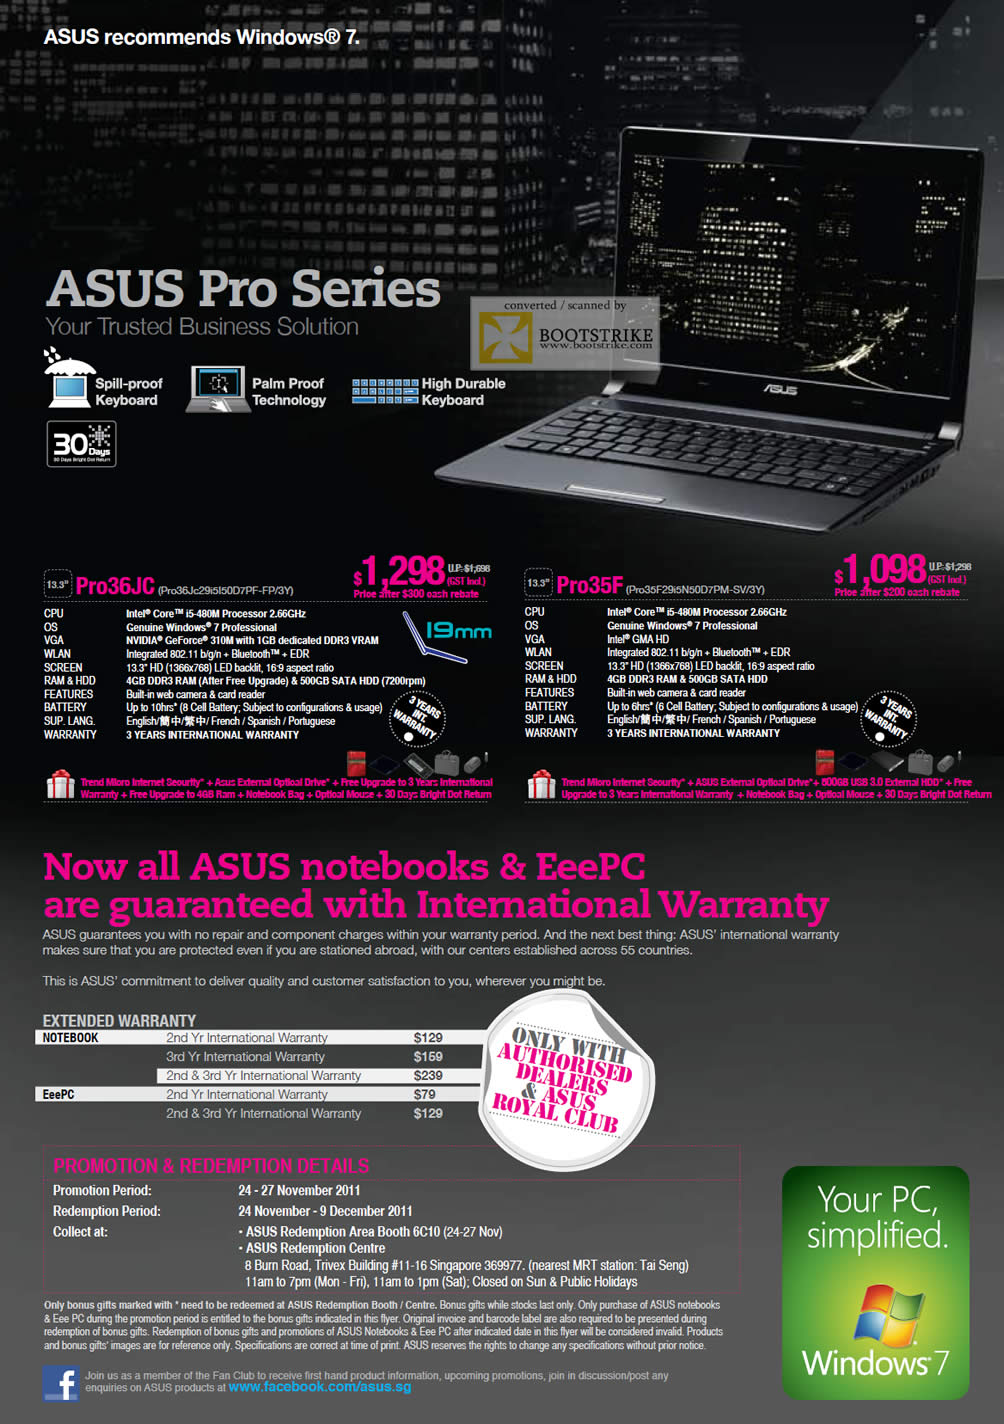 SITEX 2011 price list image brochure of ASUS Notebooks Pro Pro36Jc Pro36Jc29i5l50D7PF-FP 3Y, Pro35F Pro35F29i5N50D7PM-SV 3Y, Extended Warranty